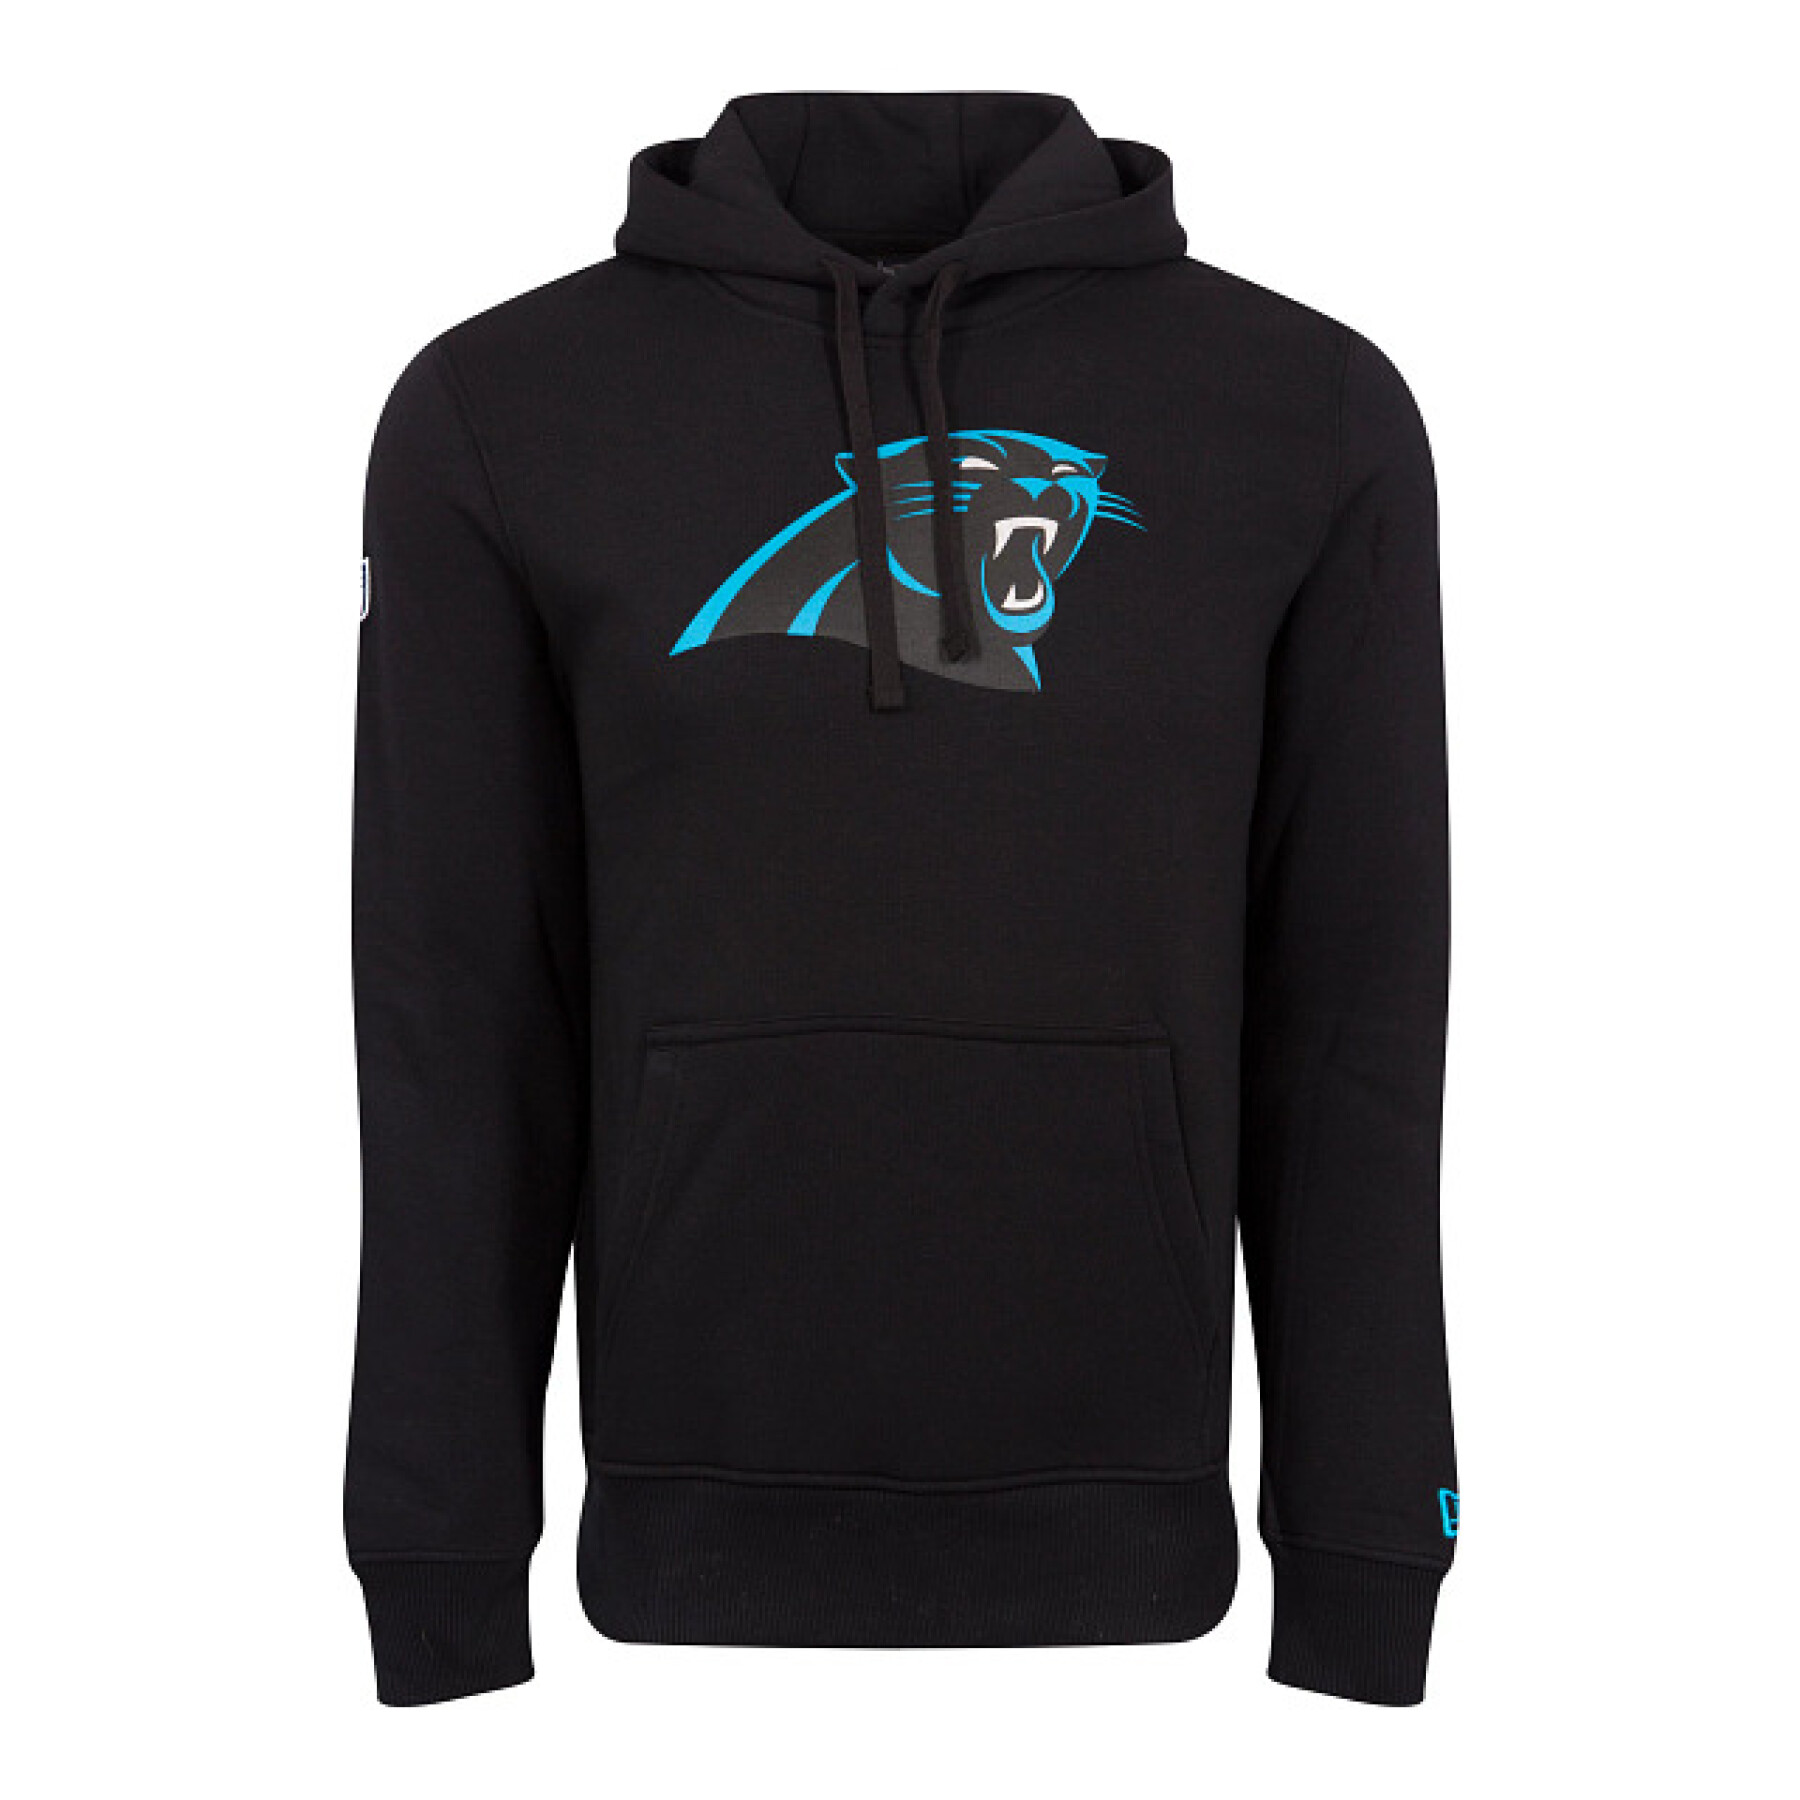 Hooded sweatshirt Panthers NFL